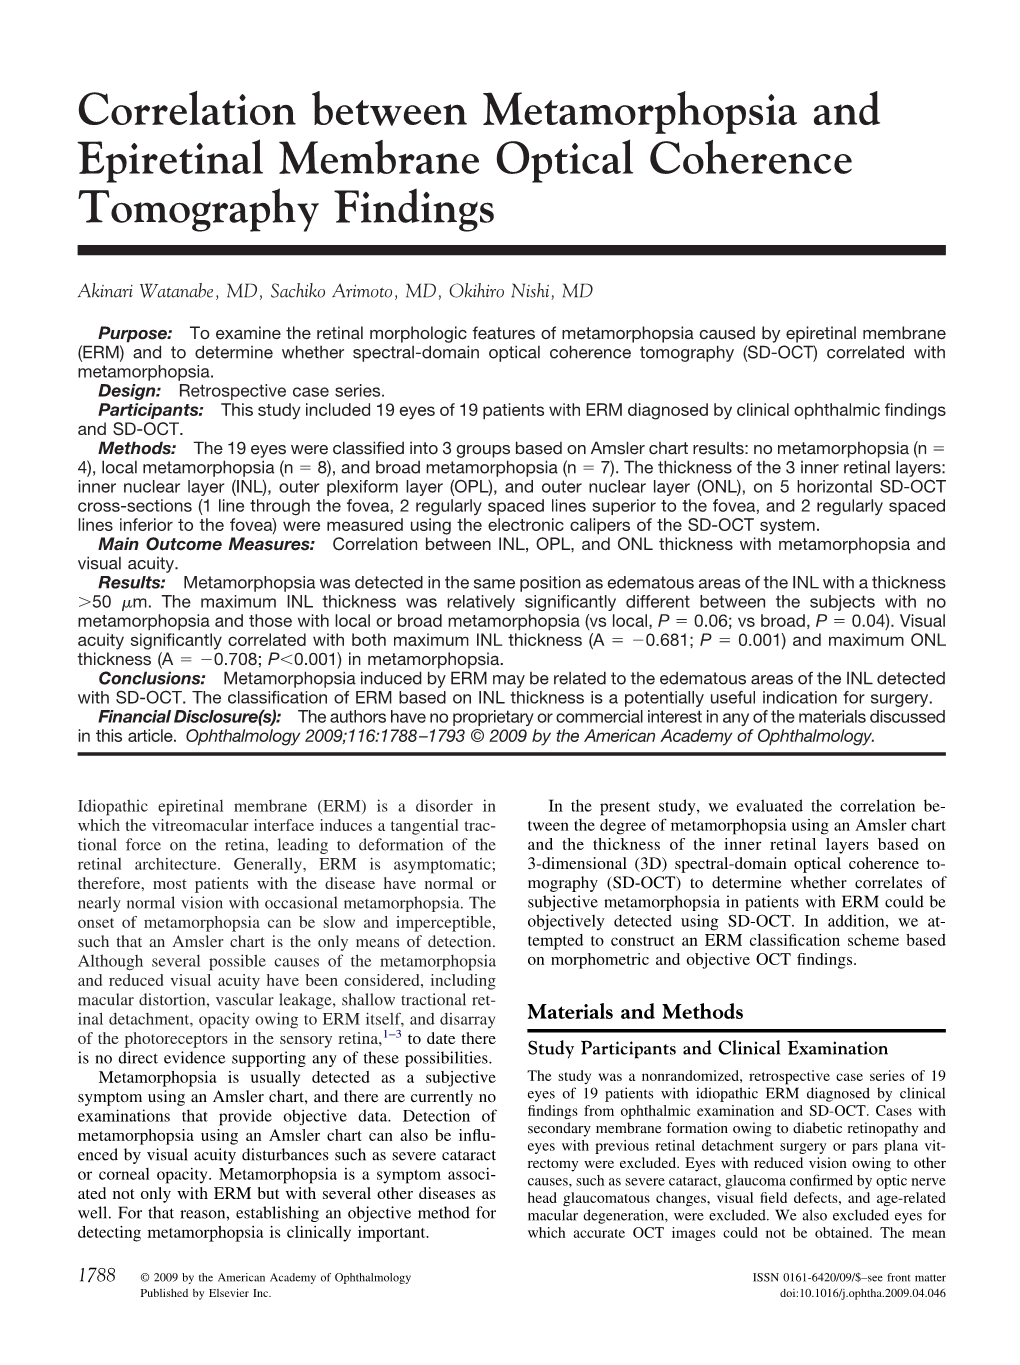 Correlation Between Metamorphopsia and Epiretinal Membrane Optical Coherence Tomography Findings